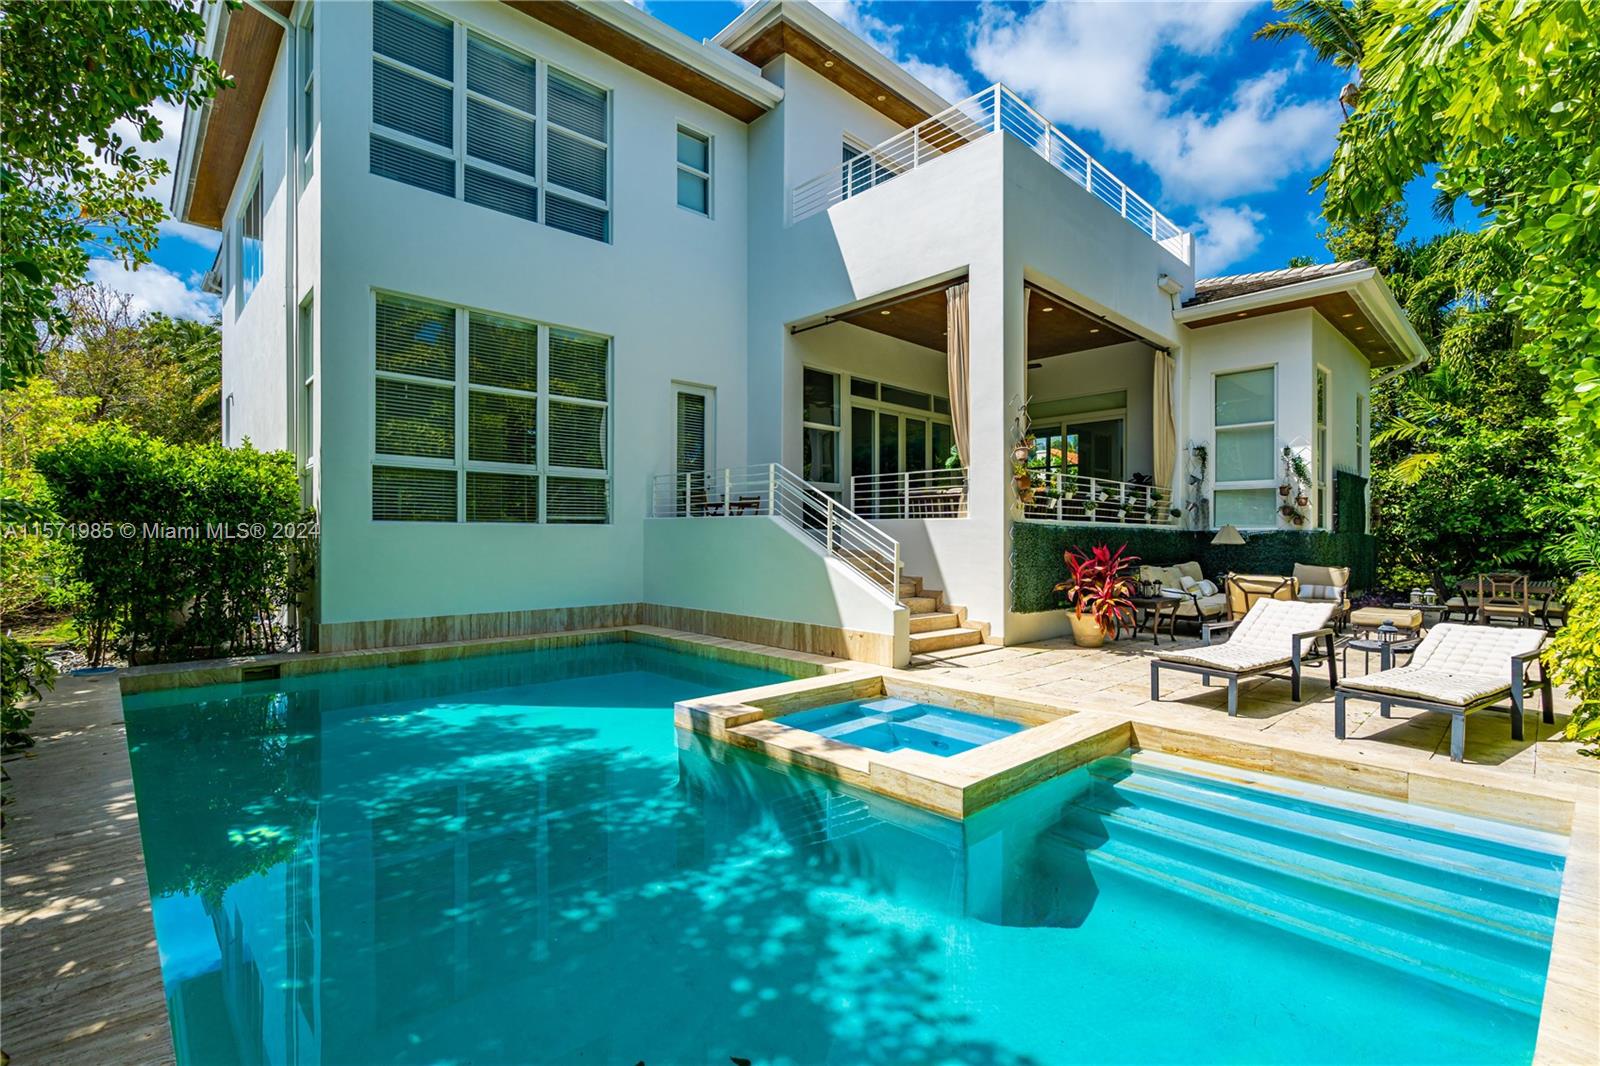 Rental Property at 435 Hampton Ln Ln, Key Biscayne, Miami-Dade County, Florida - Bedrooms: 6 
Bathrooms: 6  - $27,000 MO.